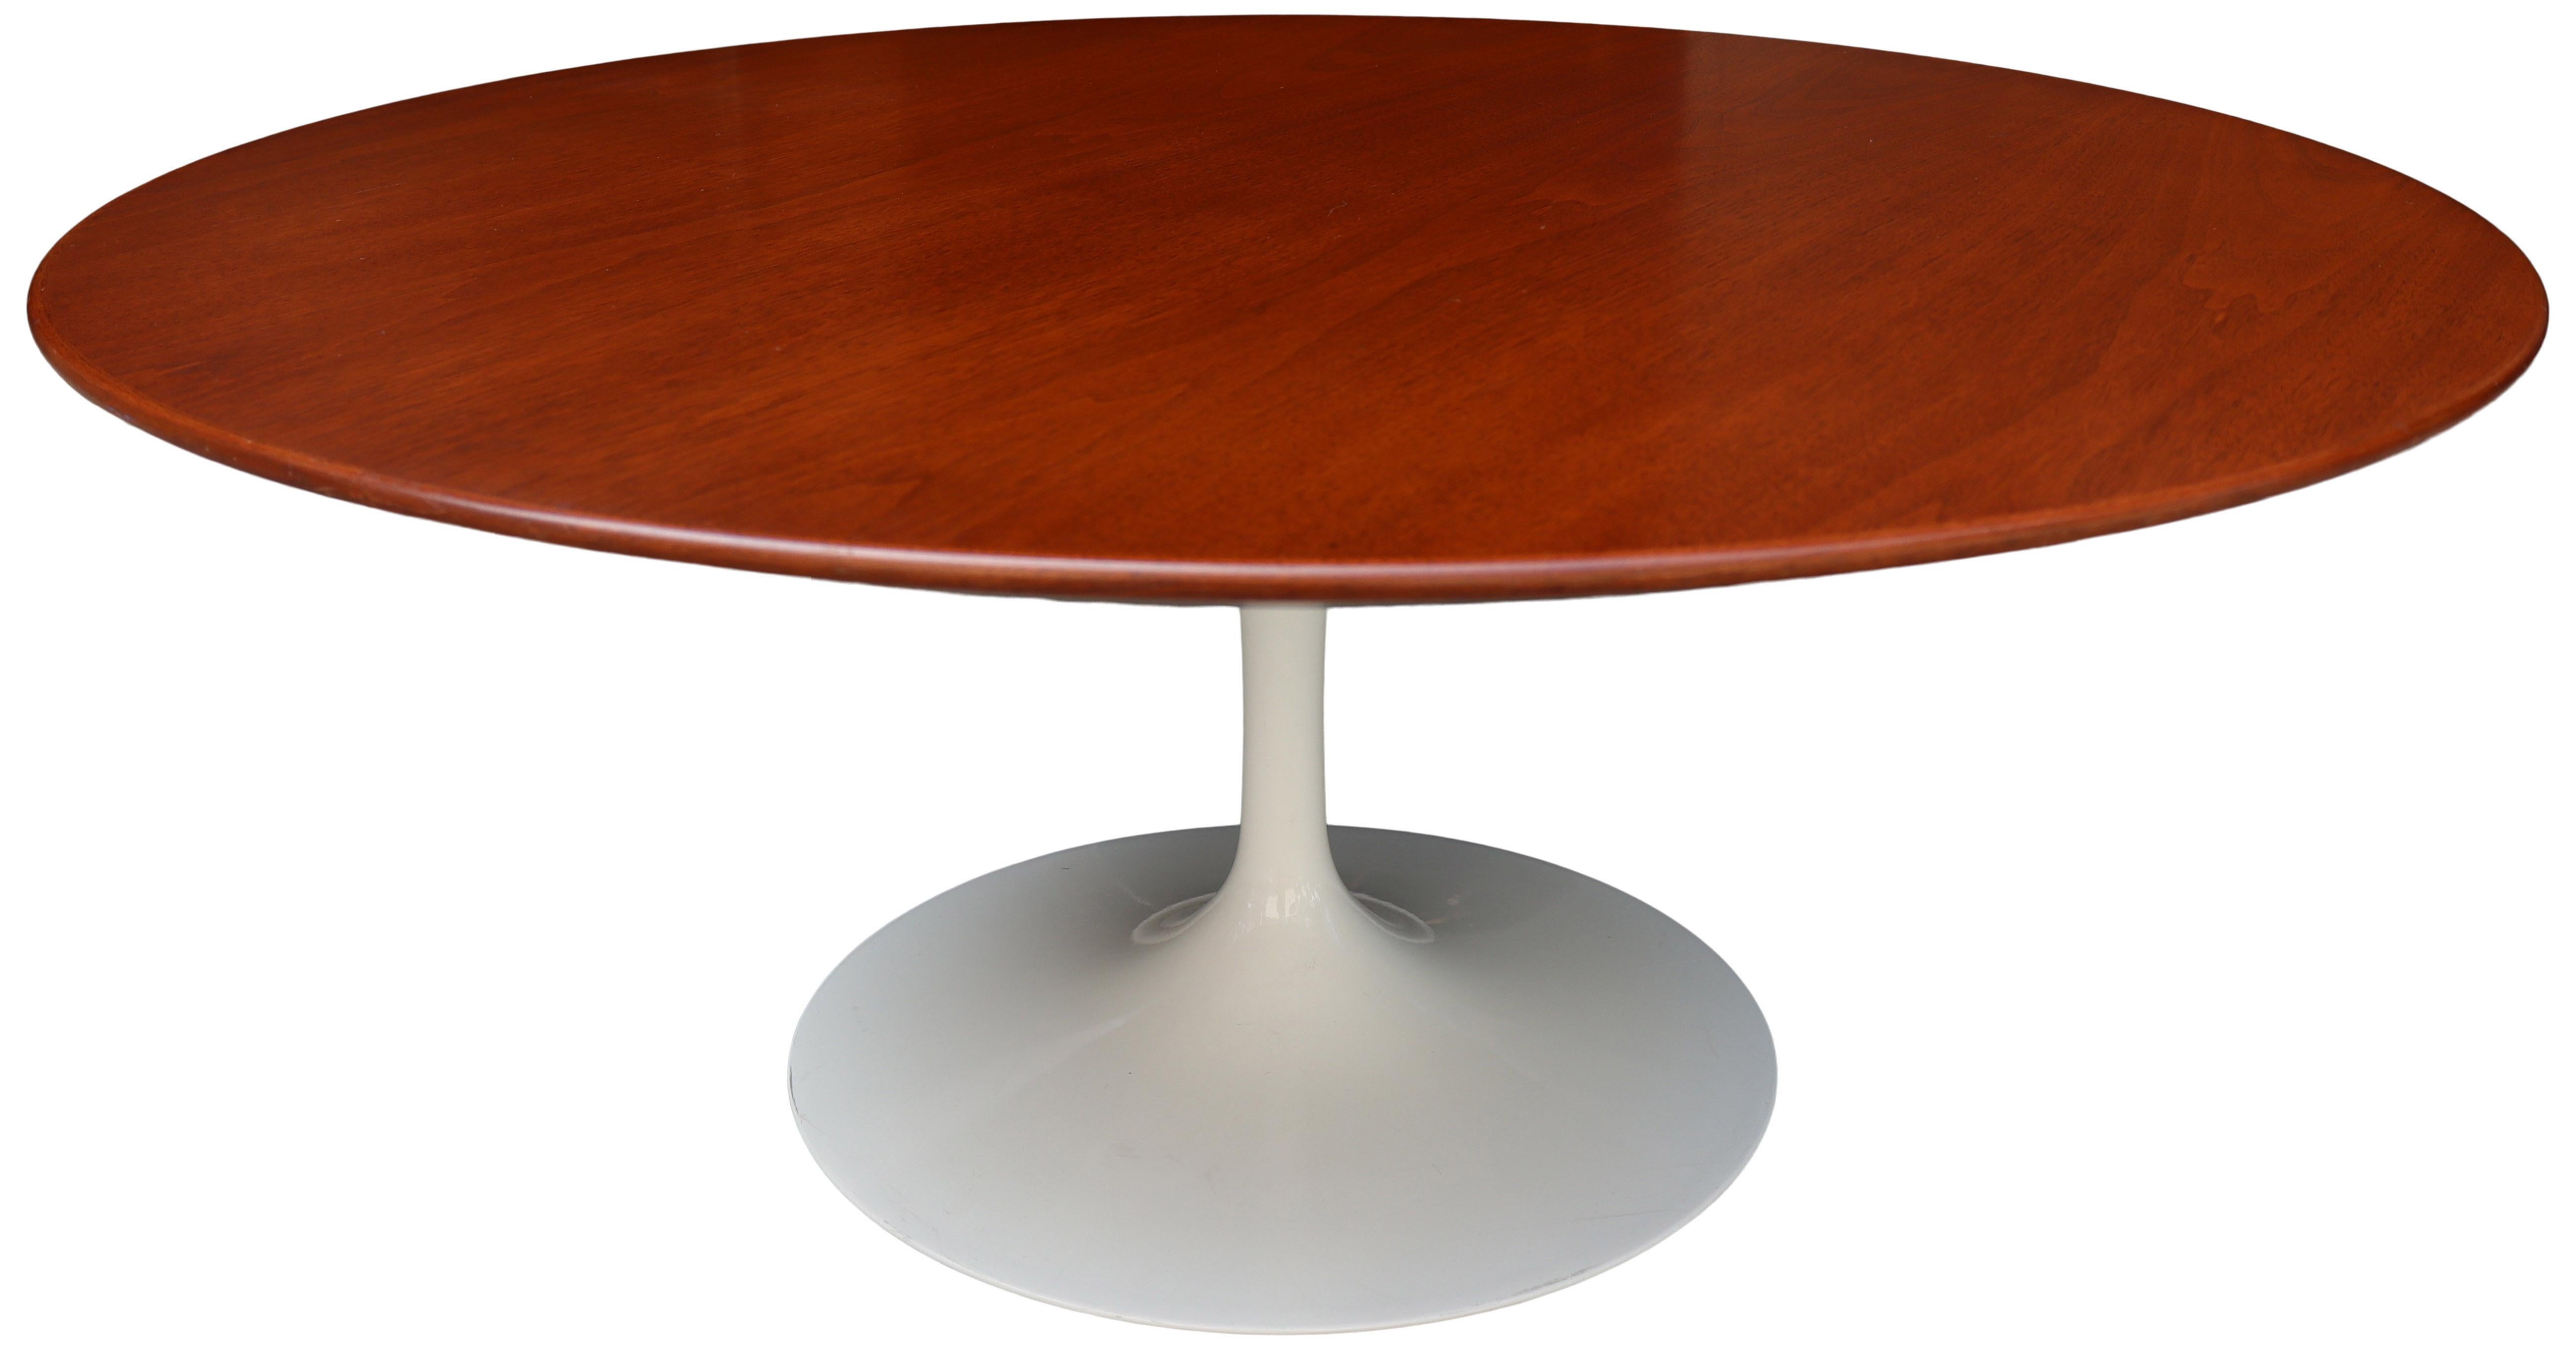 Cast Eero Saarinen for Knoll Round Tulip Coffee Table